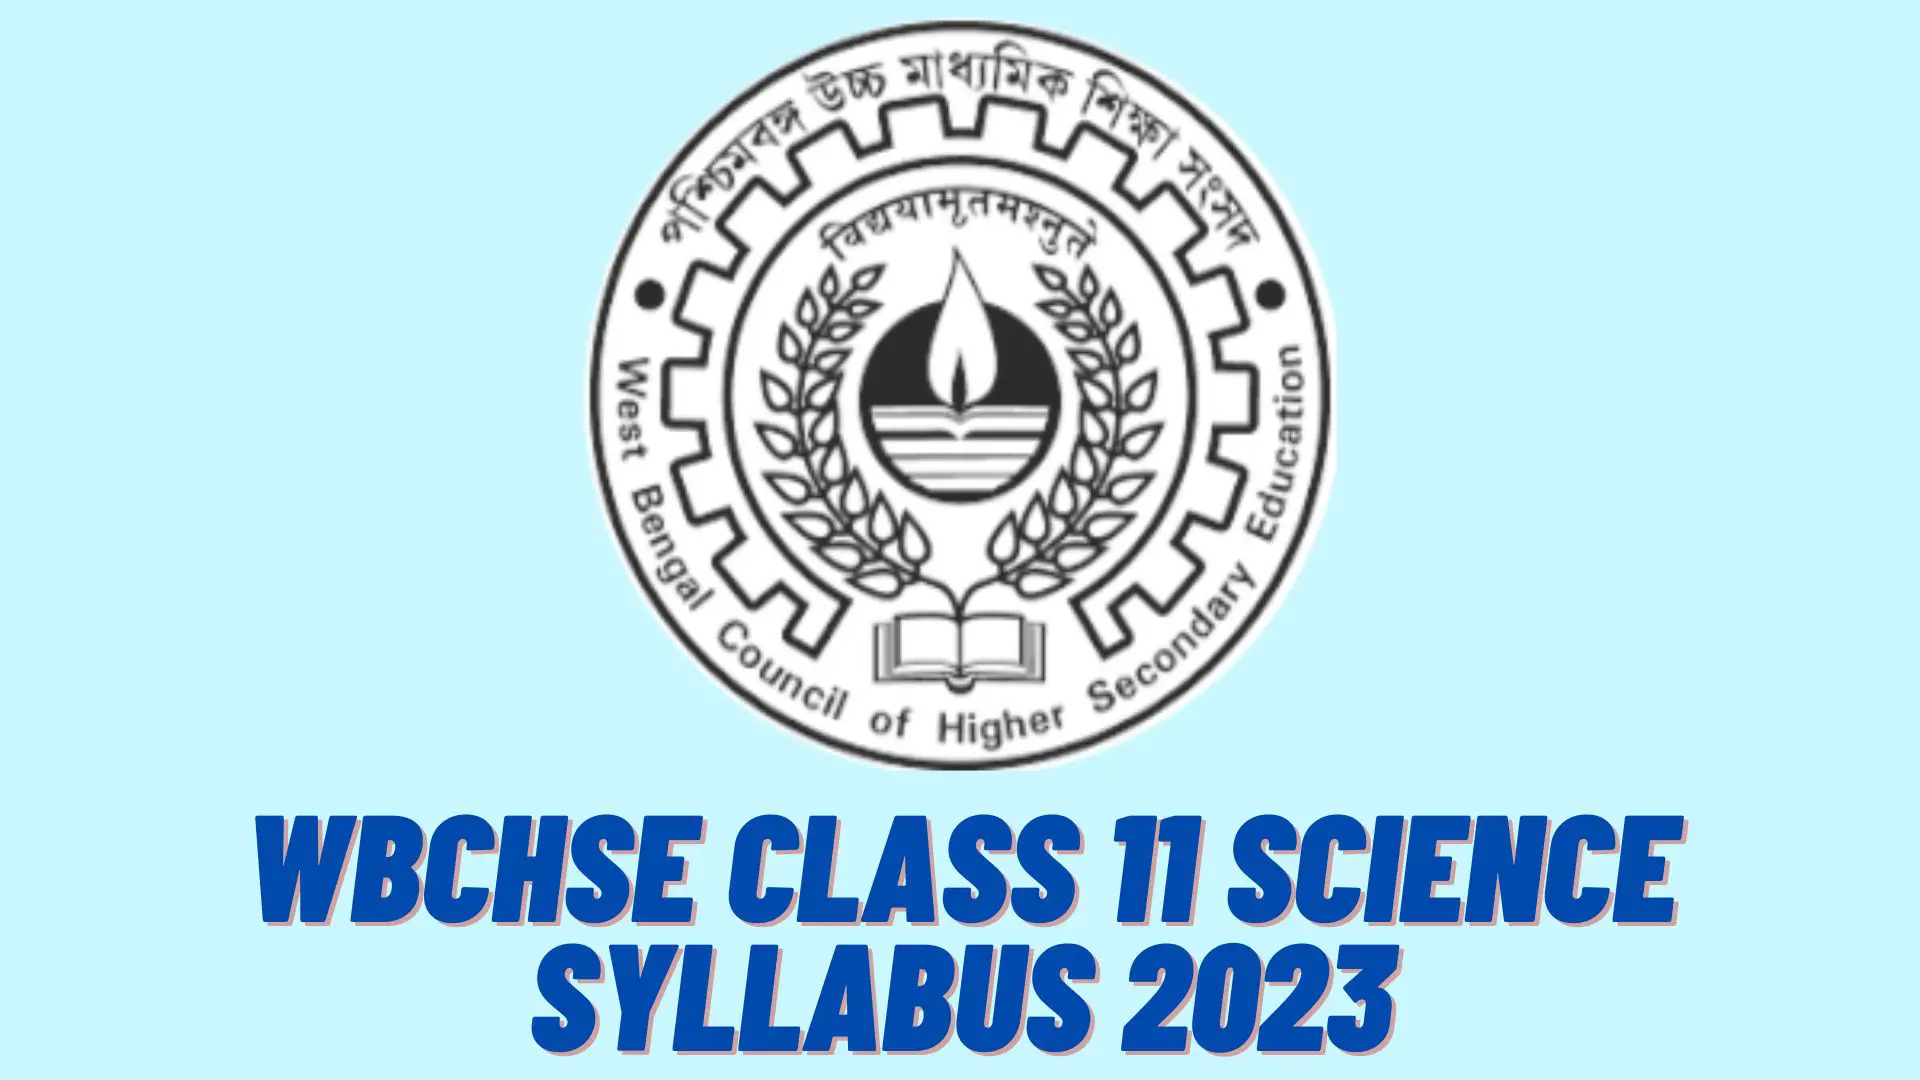 WBCHSE Class 11 Science Syllabus 2023